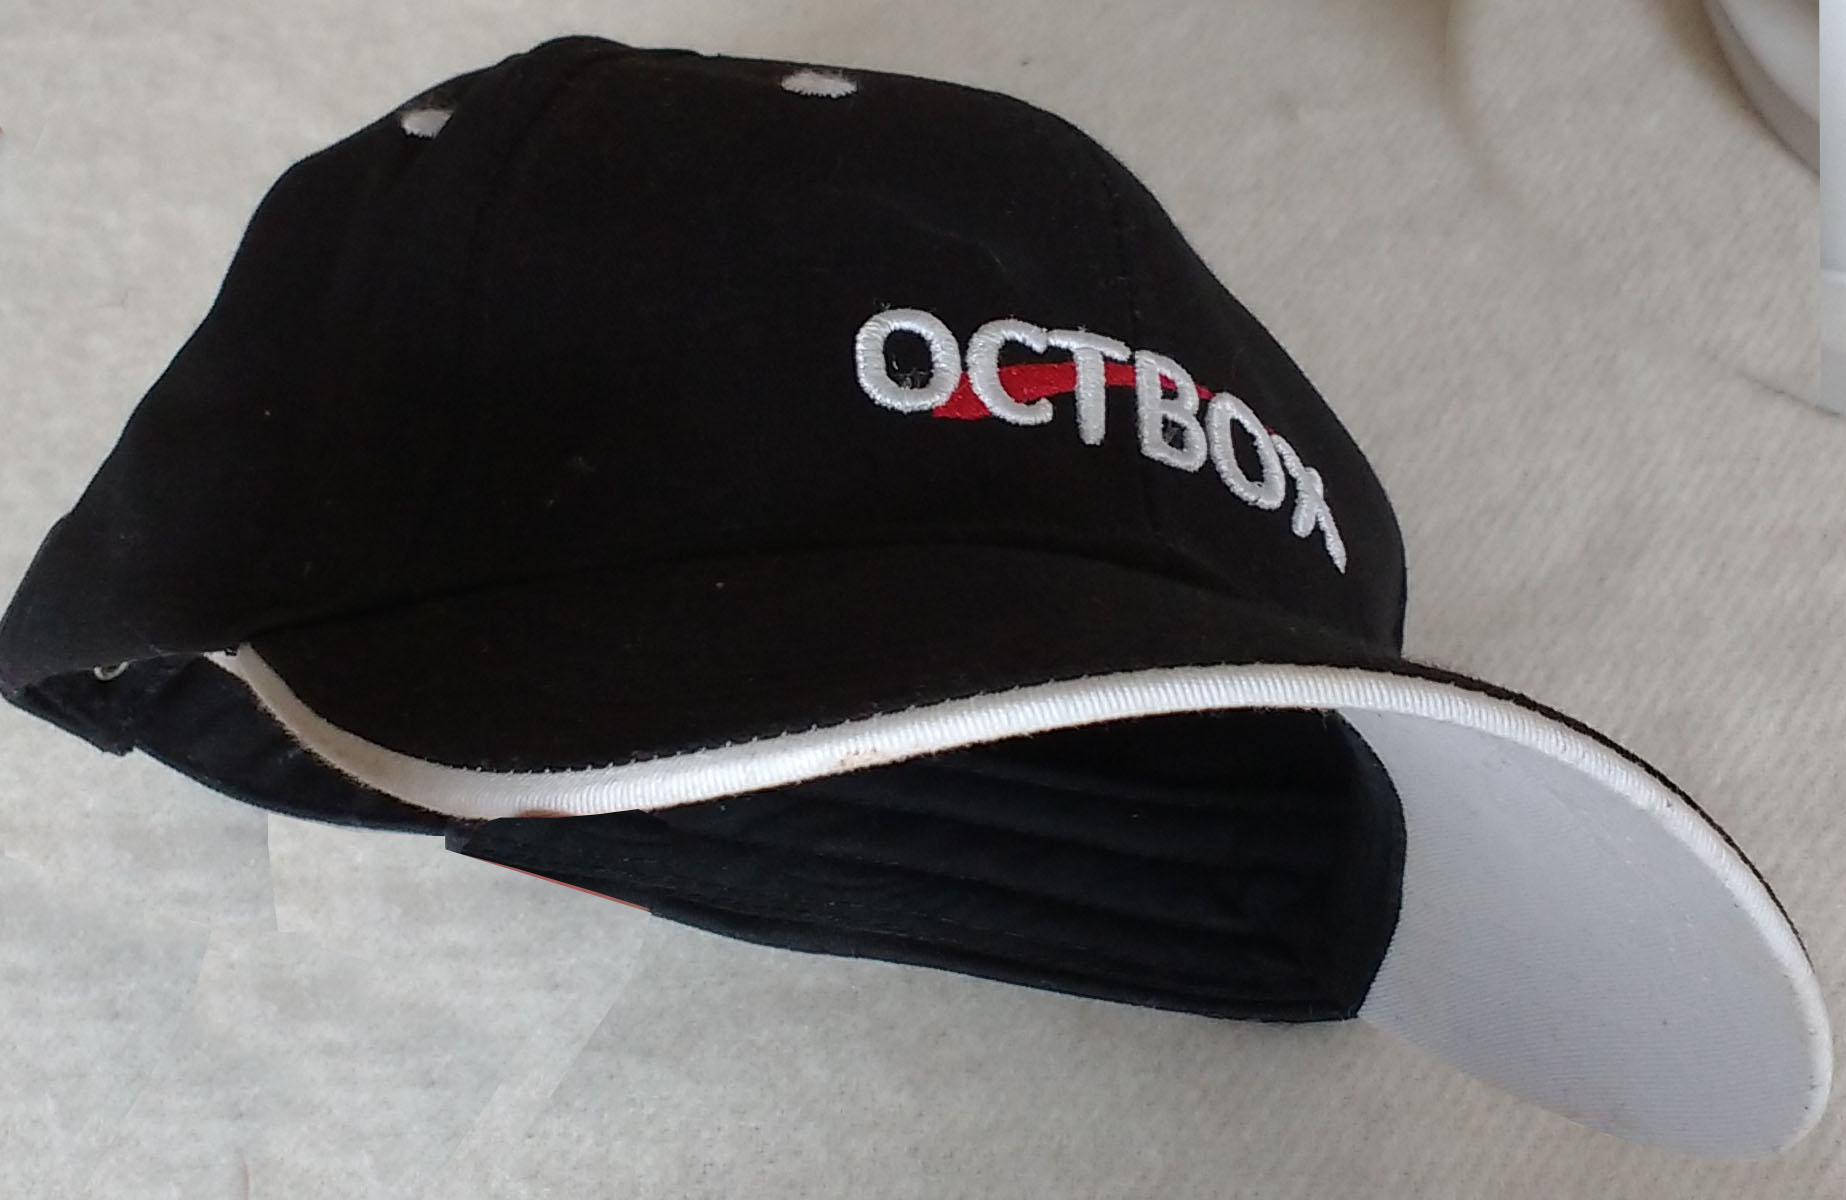 Octbox Cap - Black with White Trim A04C - Octbox Ltd